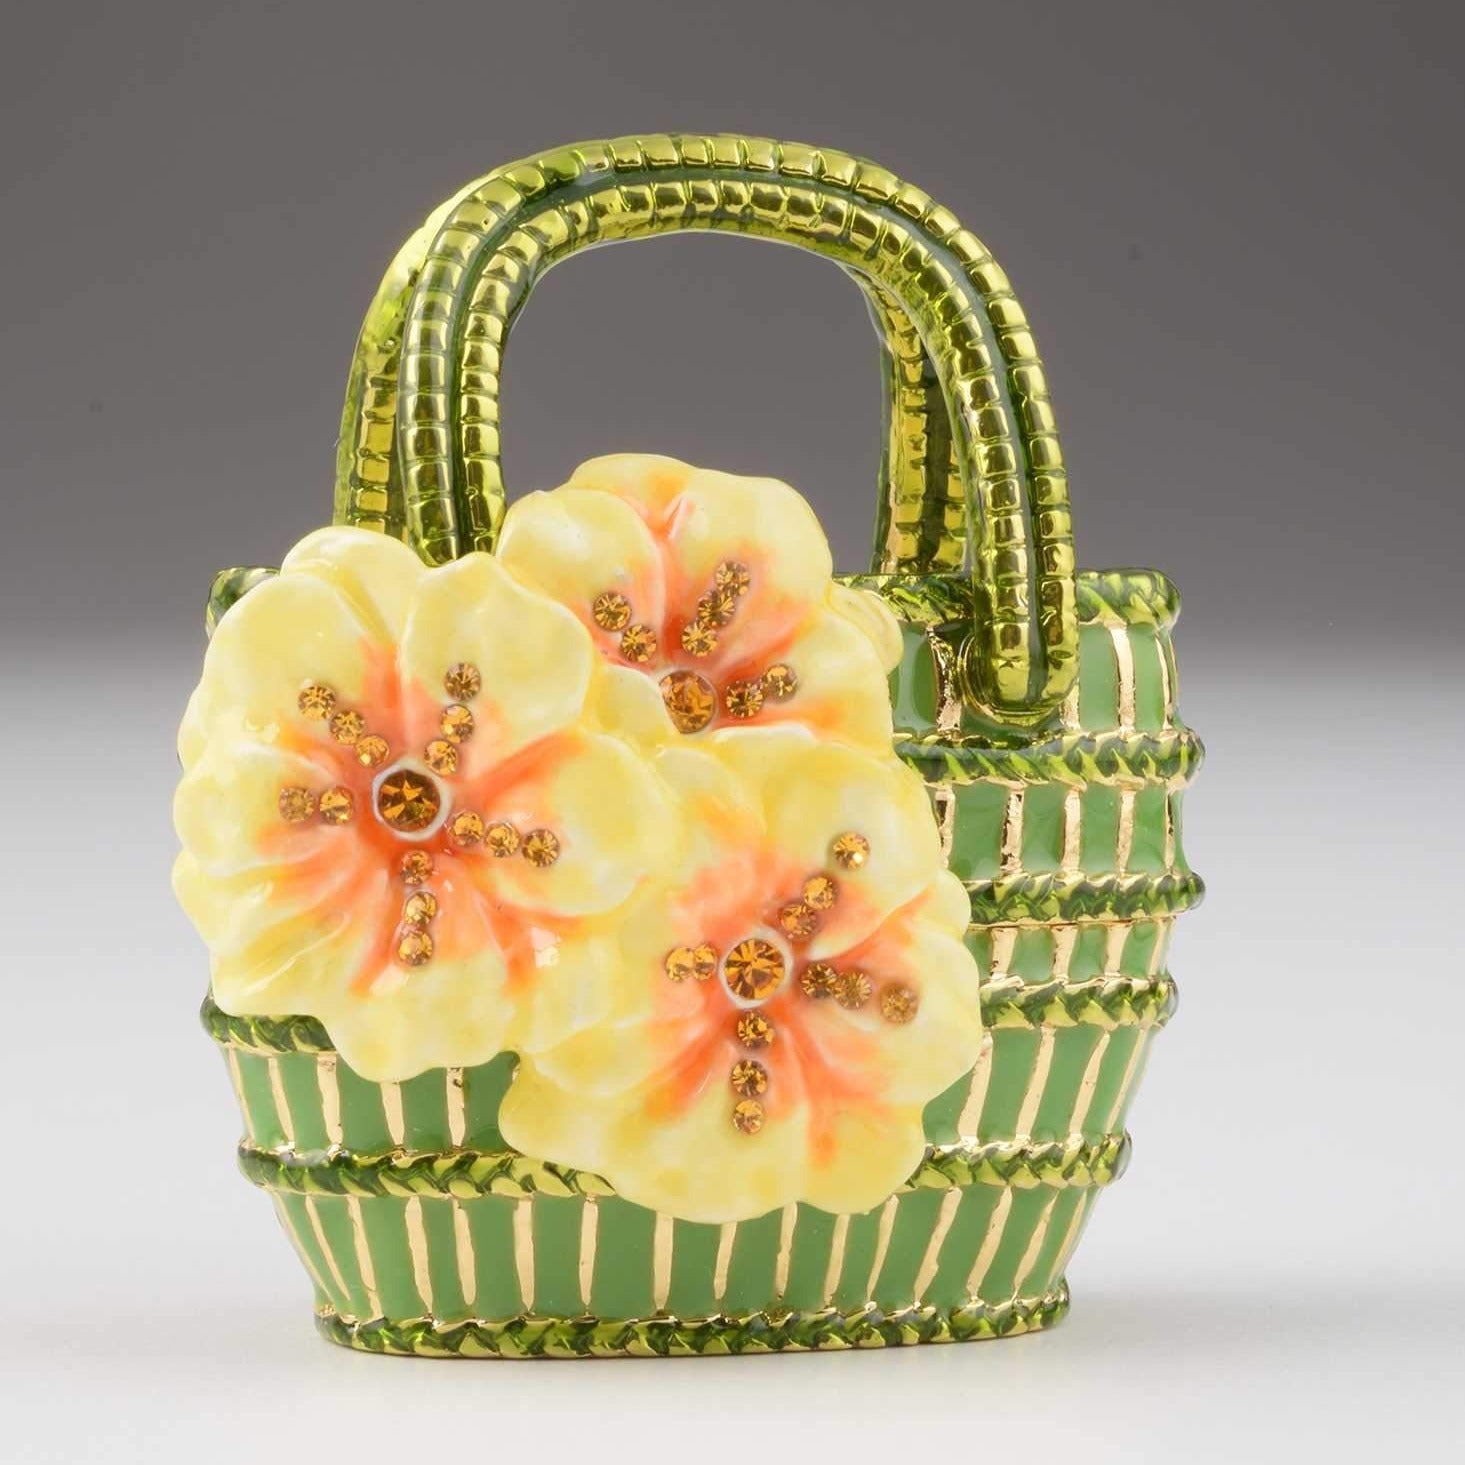 Keren Kopal Green Handbag with Yellow Flowers  49.00